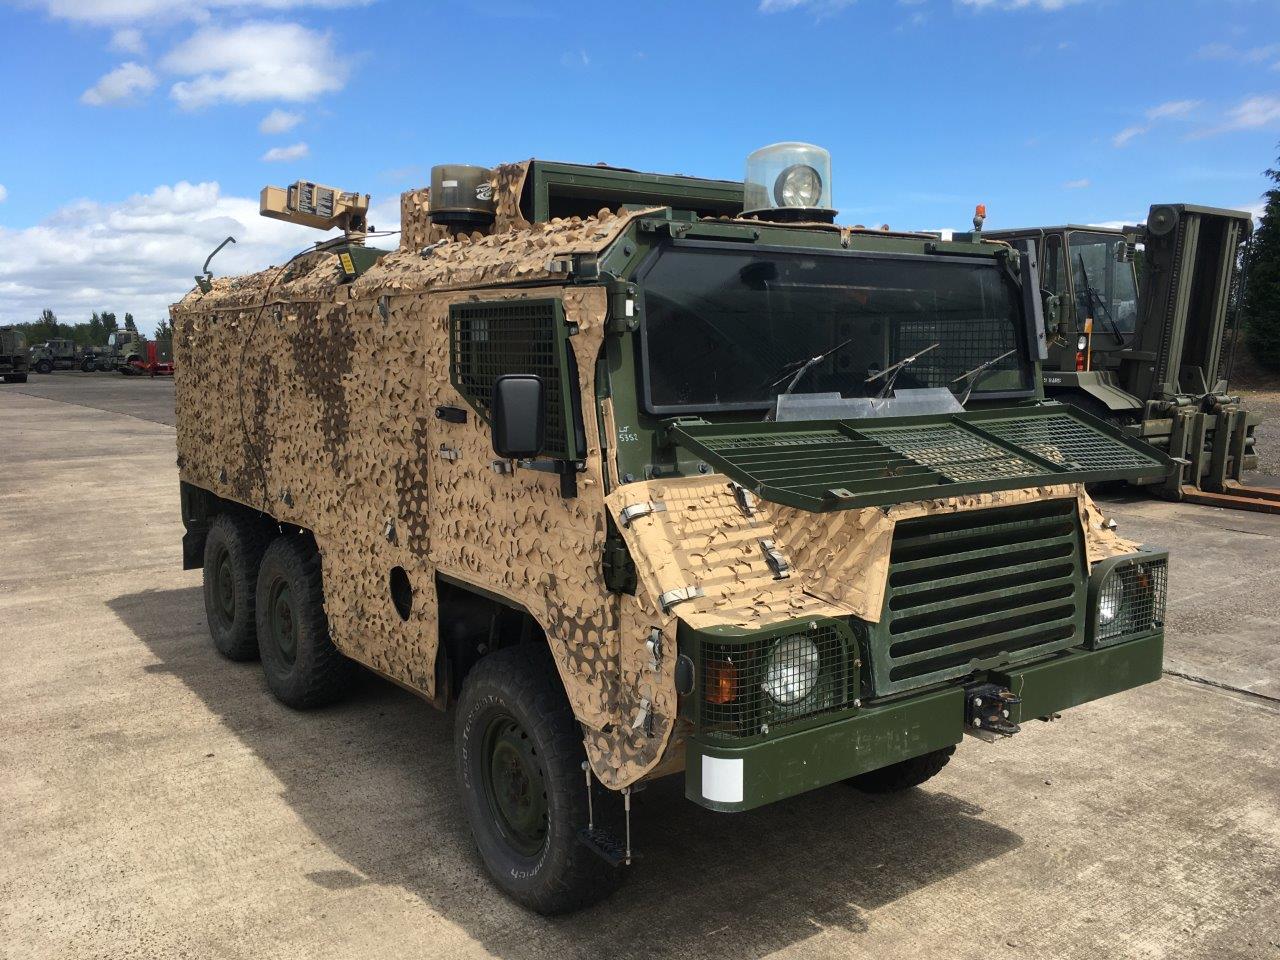 Pinzgauer Vector 718 6x6 Armoured Patrol Vehicles - ex military vehicles for sale, mod surplus